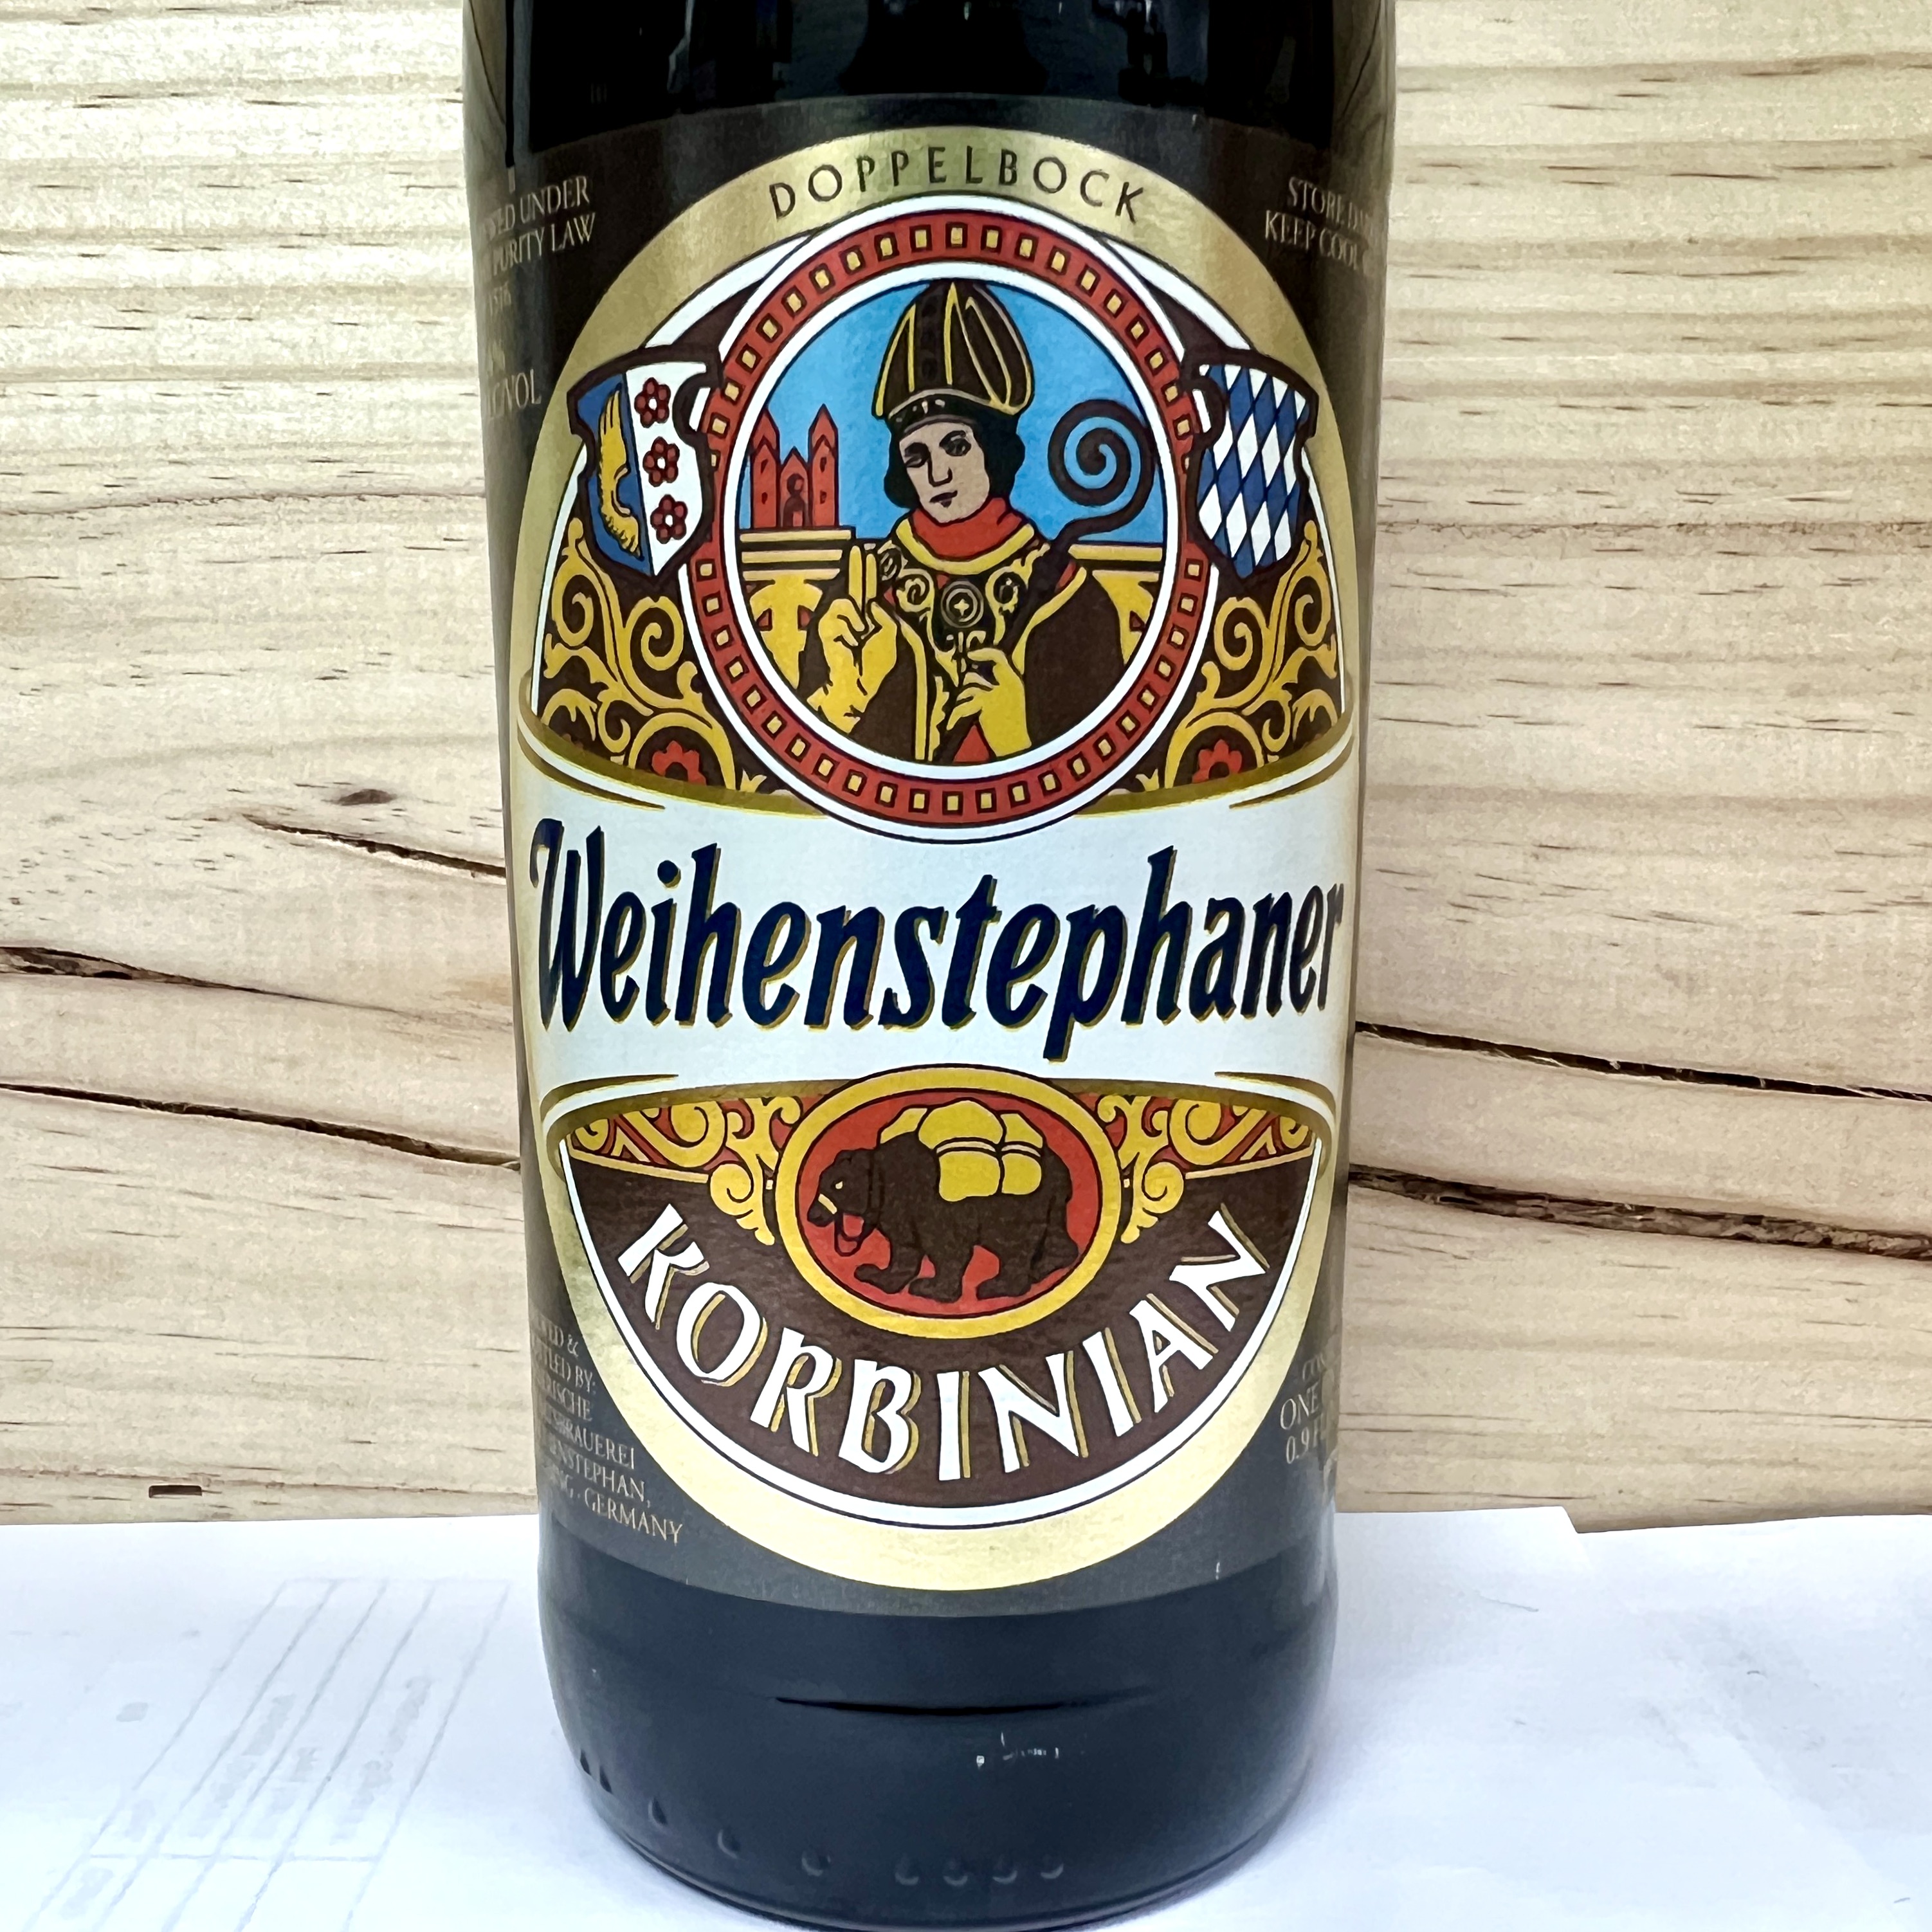 Weihenstephaner Korbinian Double Bock 1 pint bottle